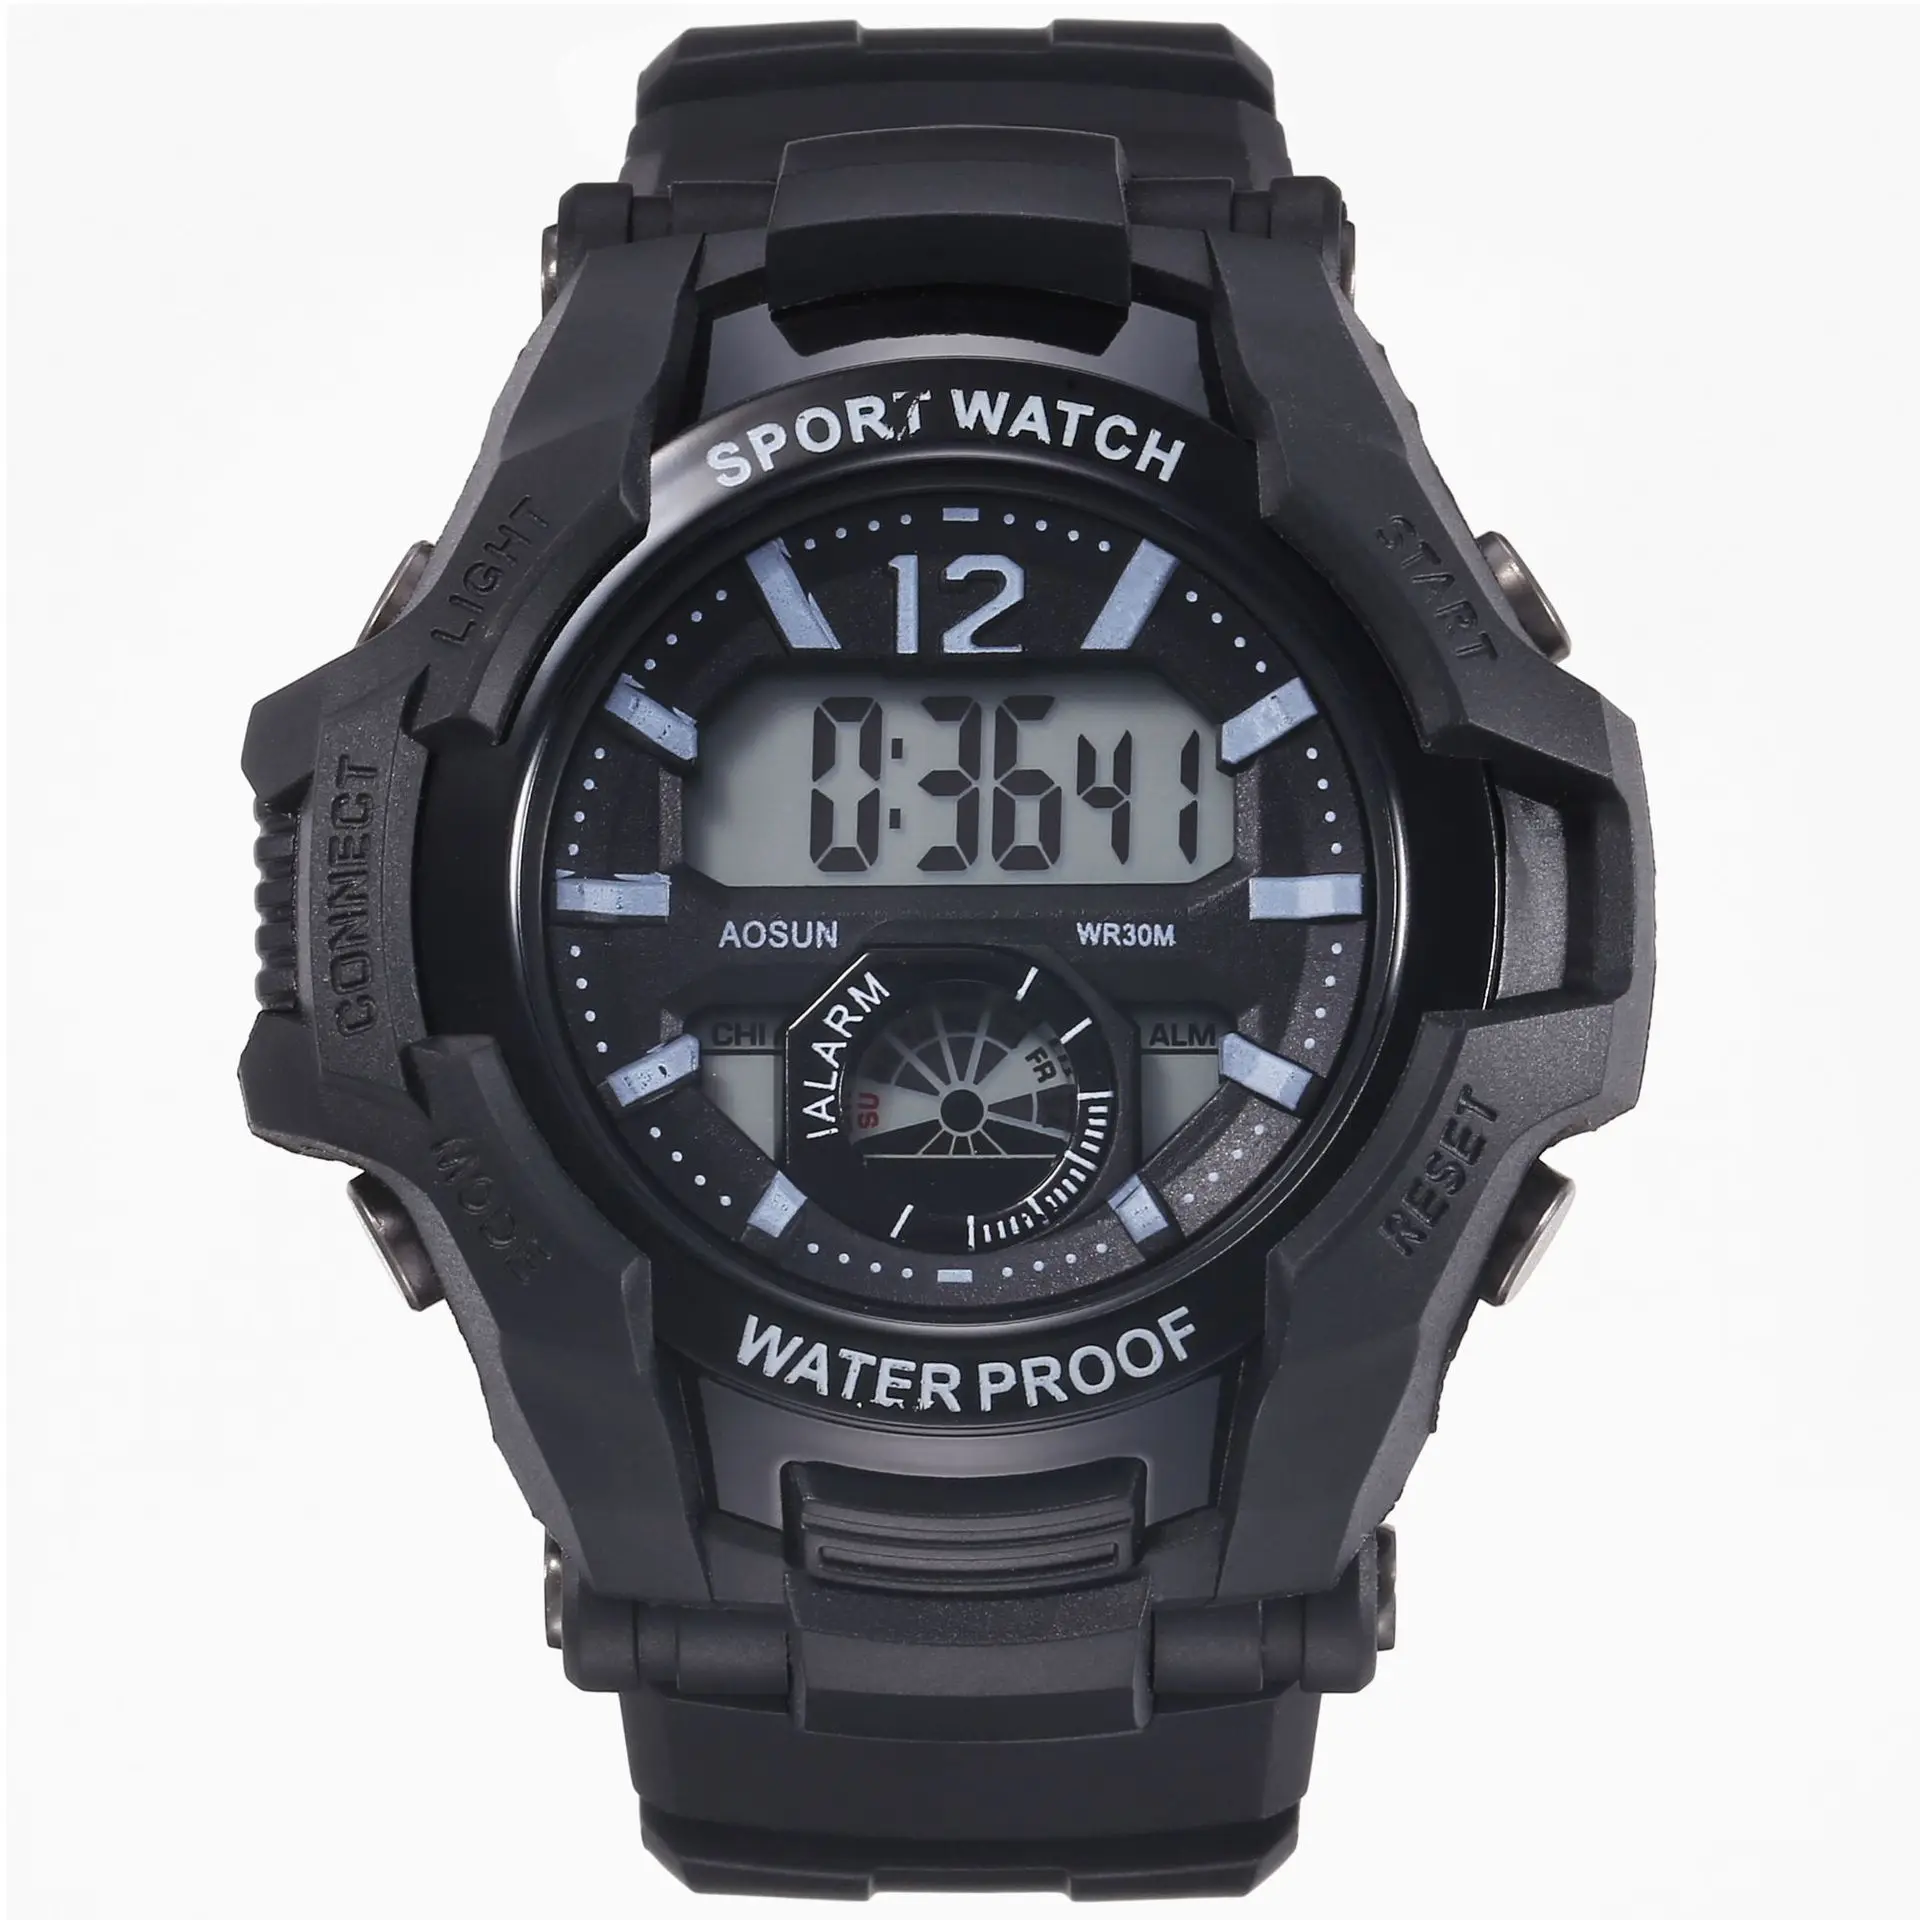 Student watch men's sports luminous multifunctional alarm clock waterproof electronic watch